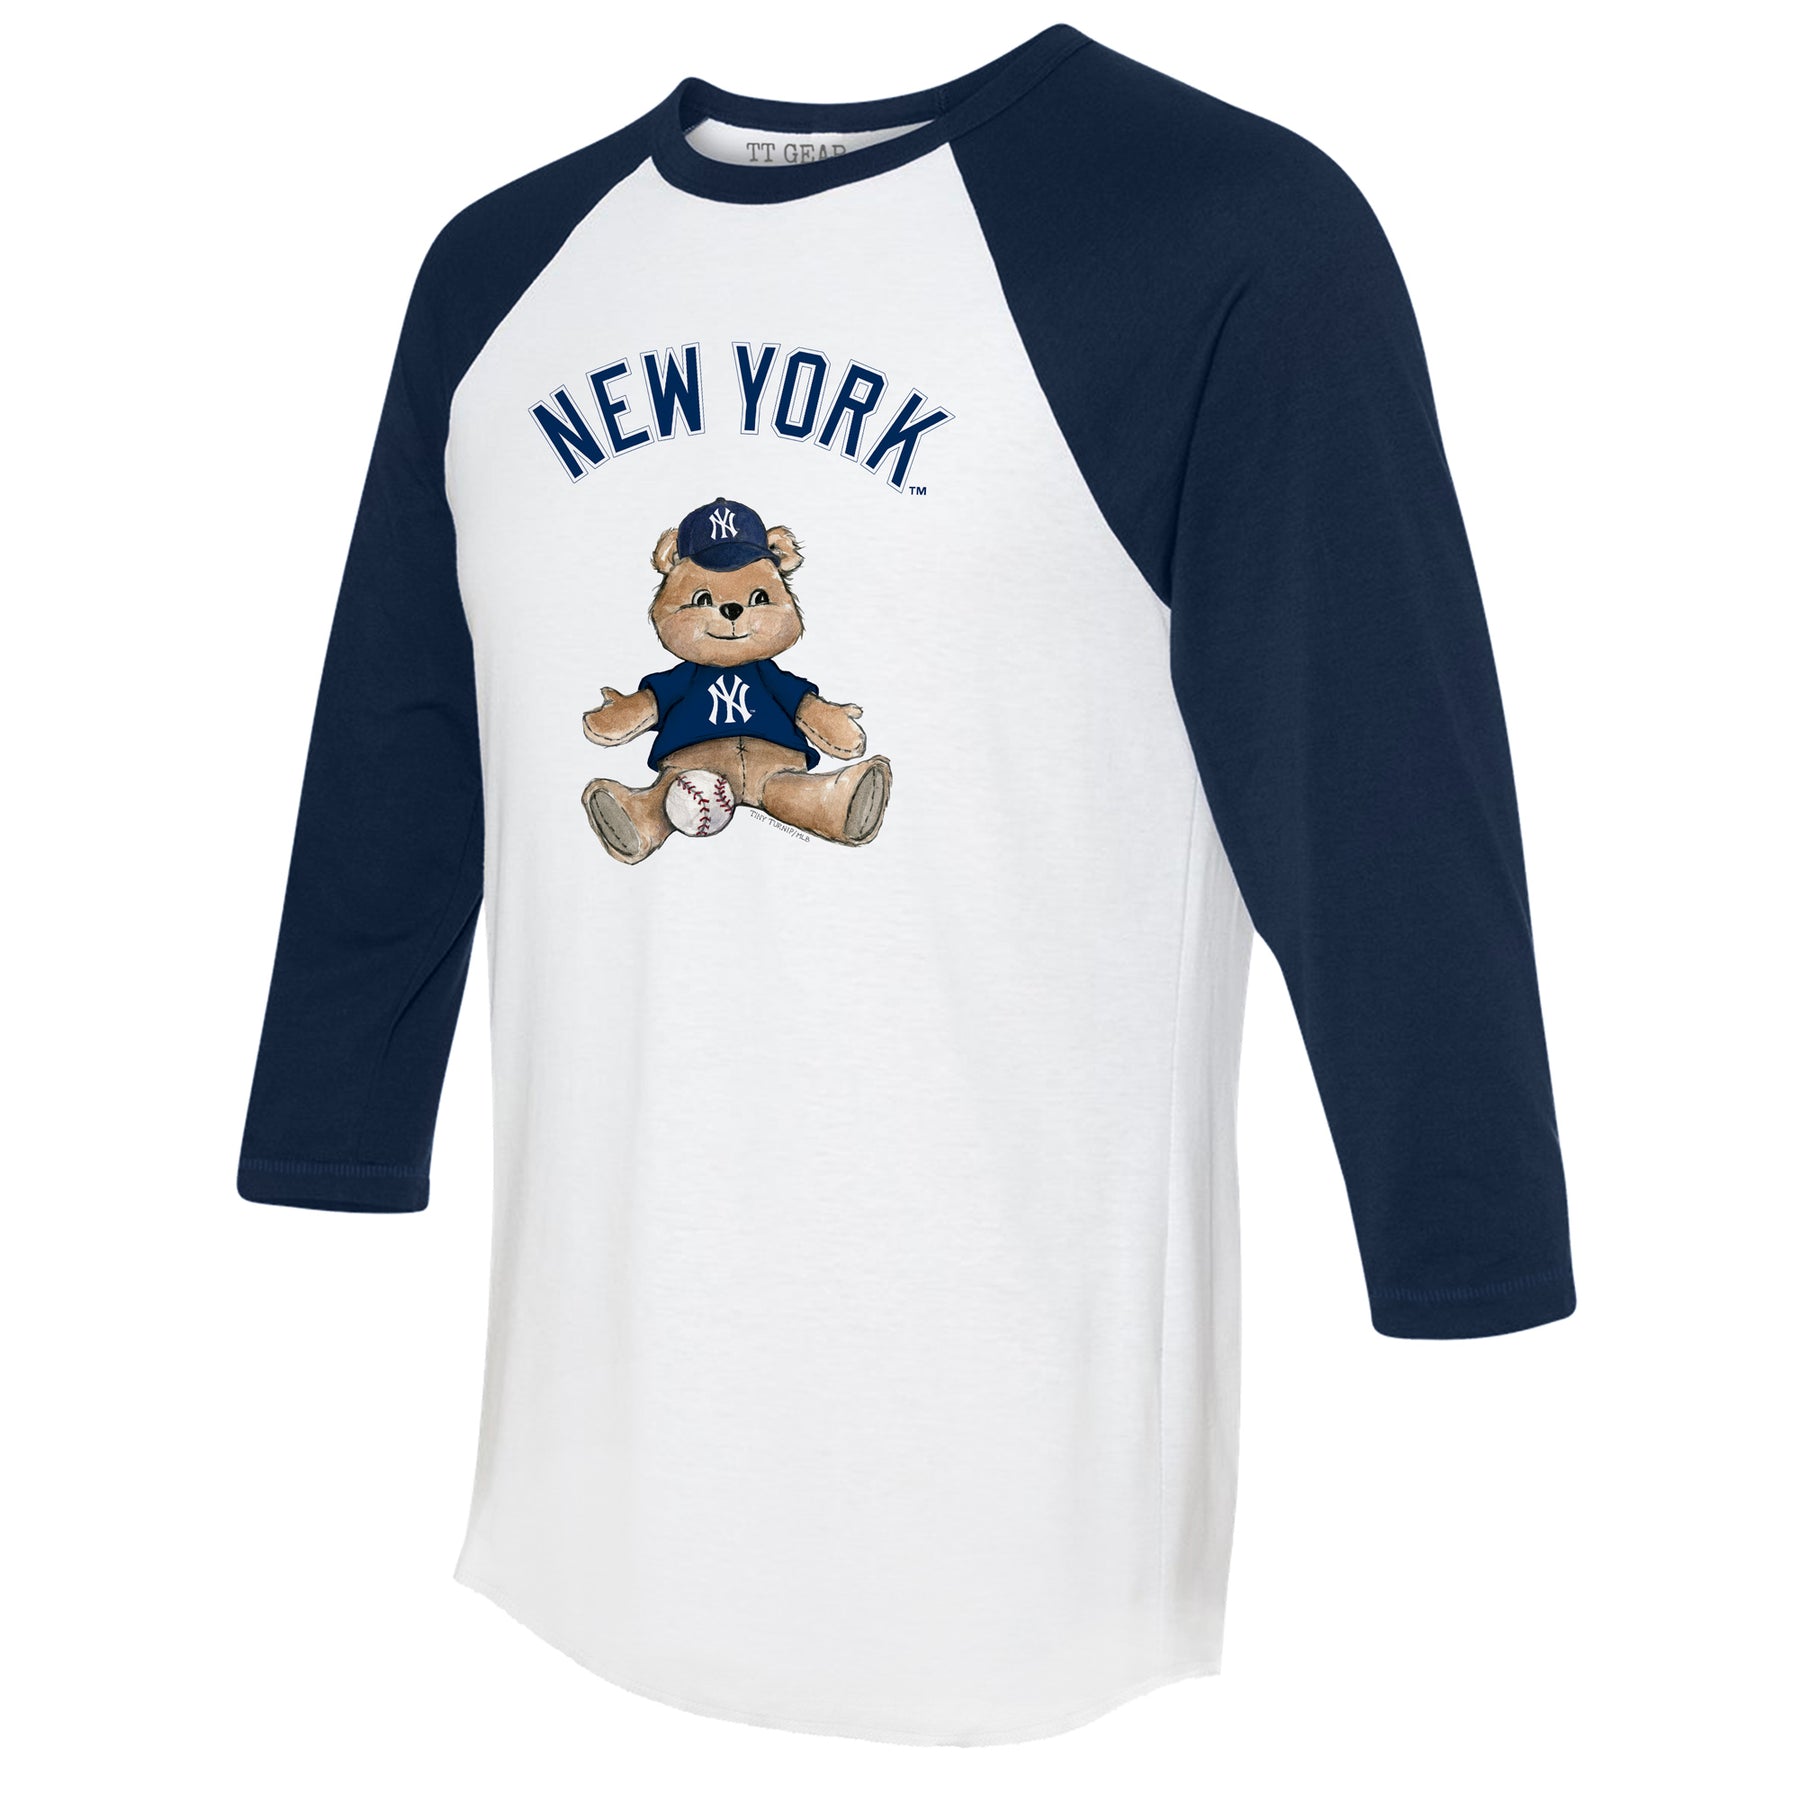 Let's Go Boston Baseball T-Shirt Ladies / Navy / 2XL